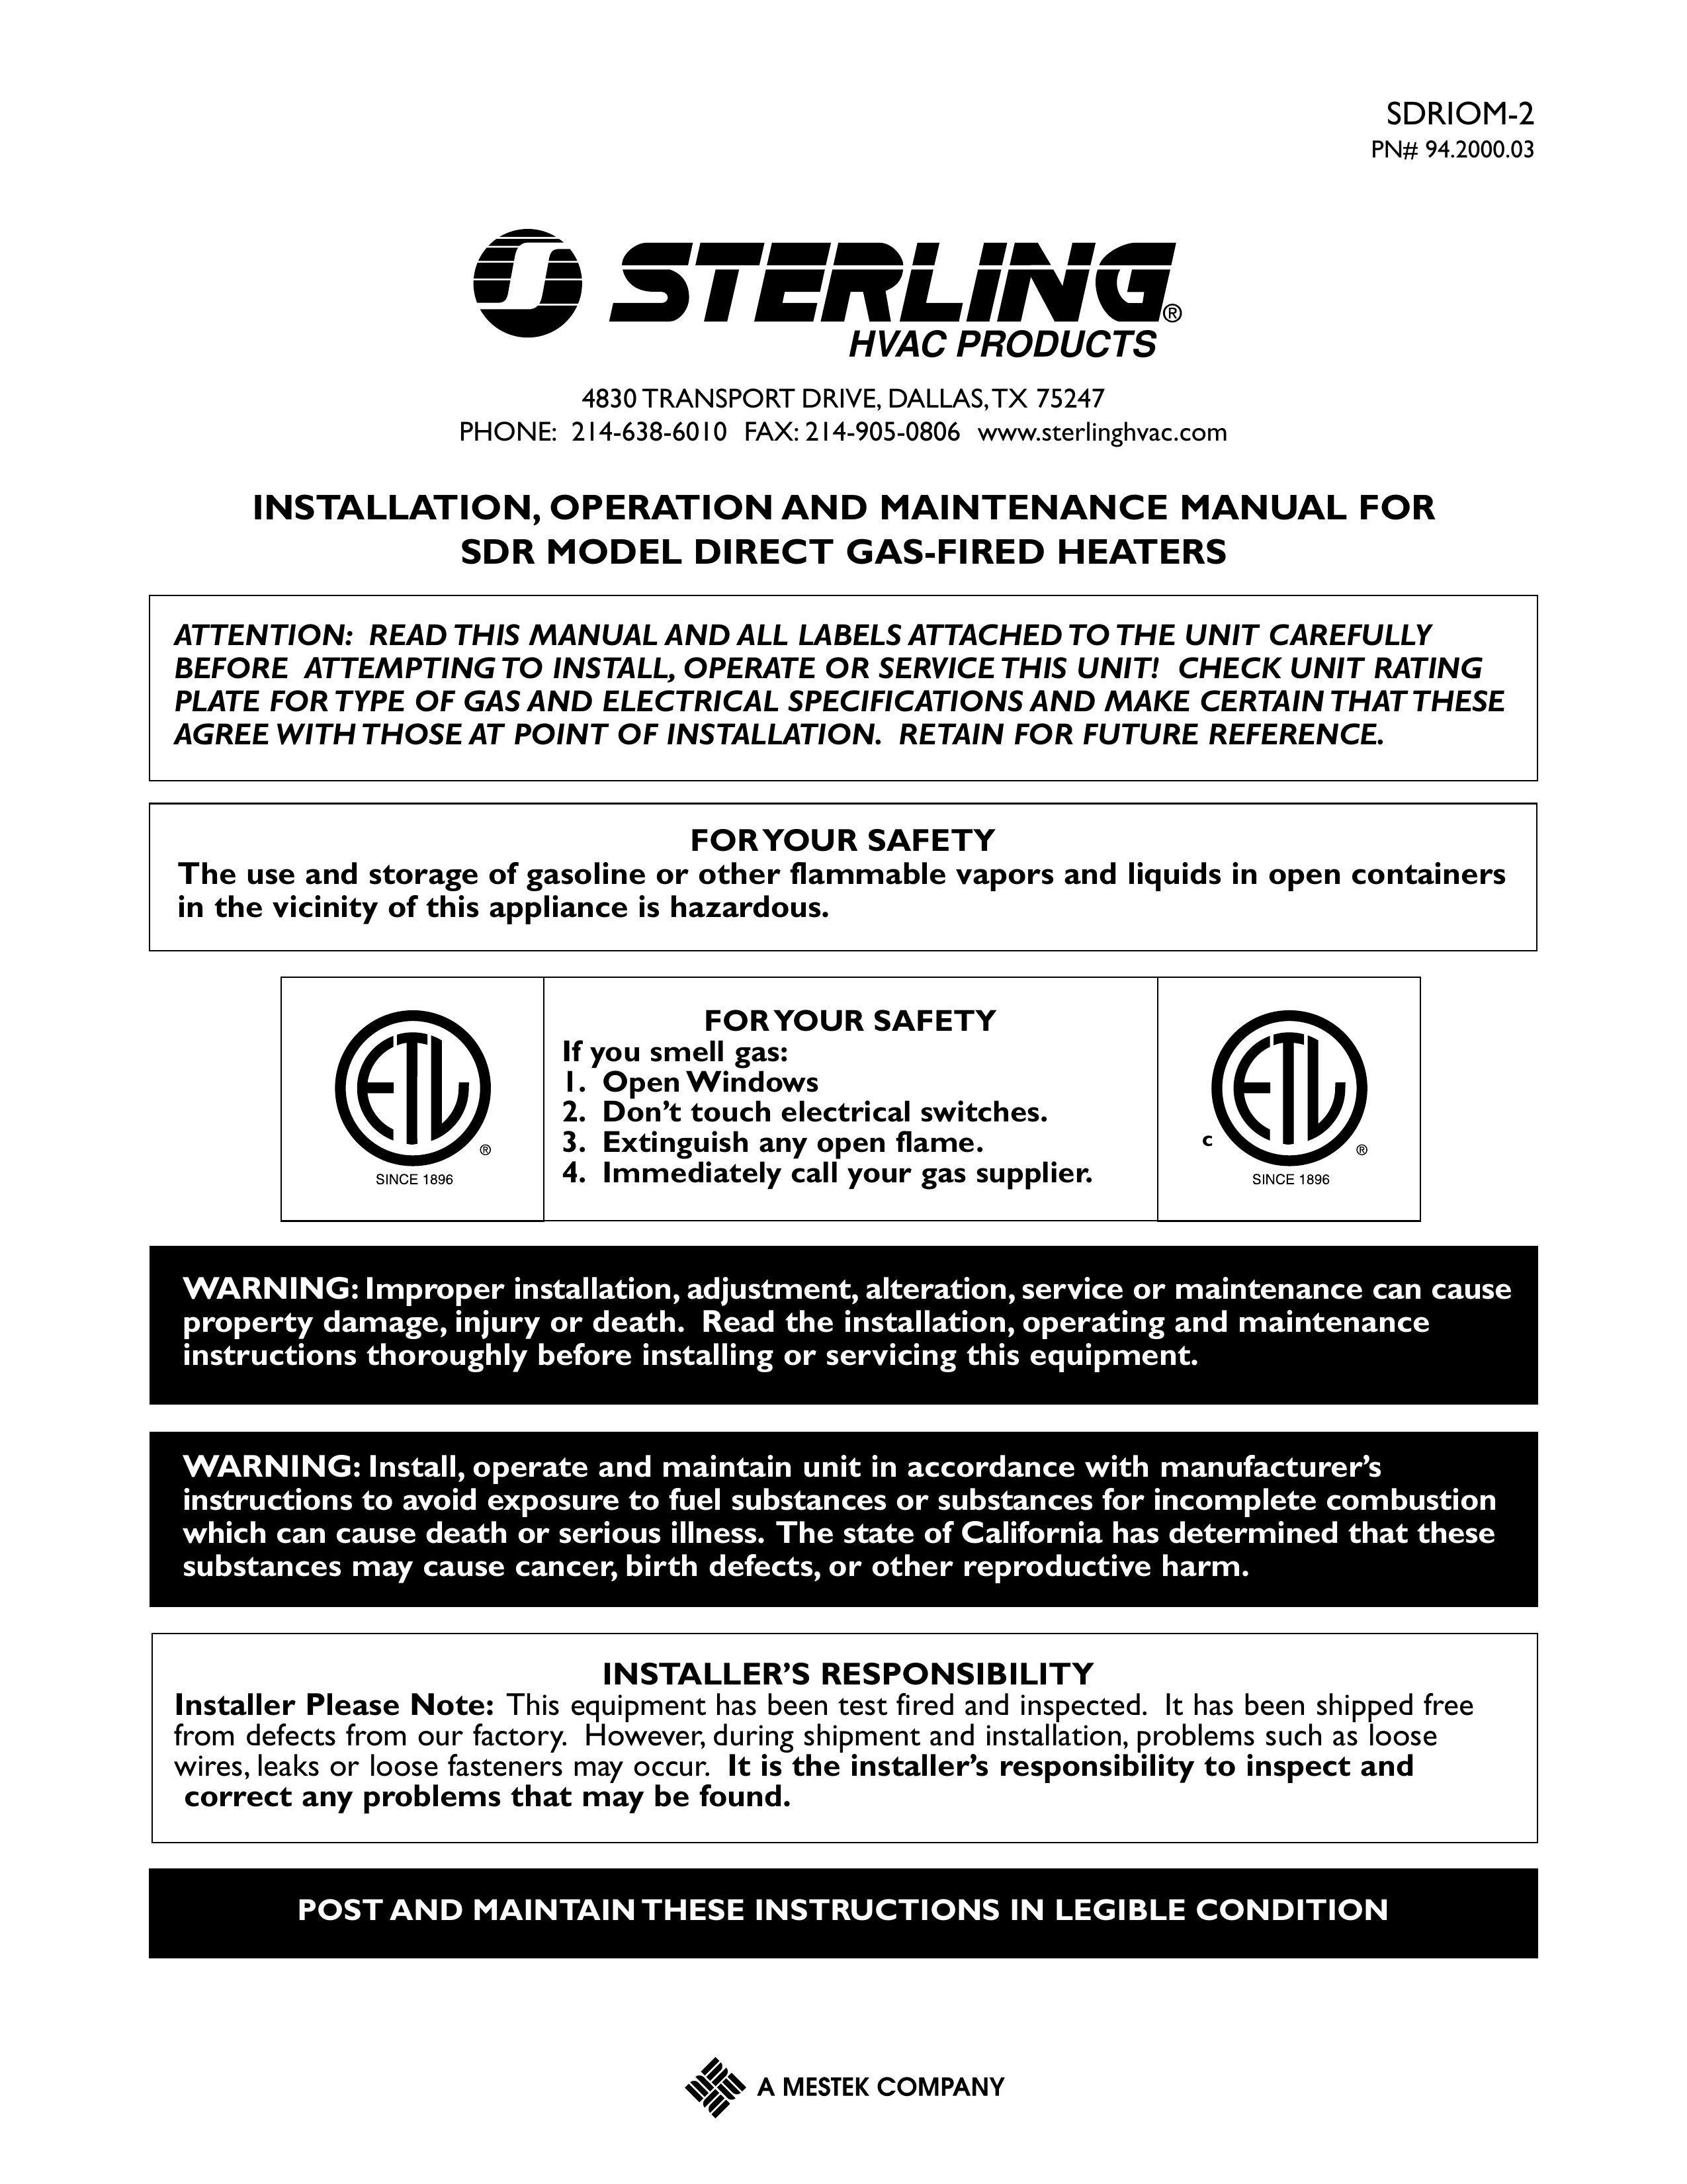 Sterling Plumbing SDRIOM-2 Camera Lens User Manual